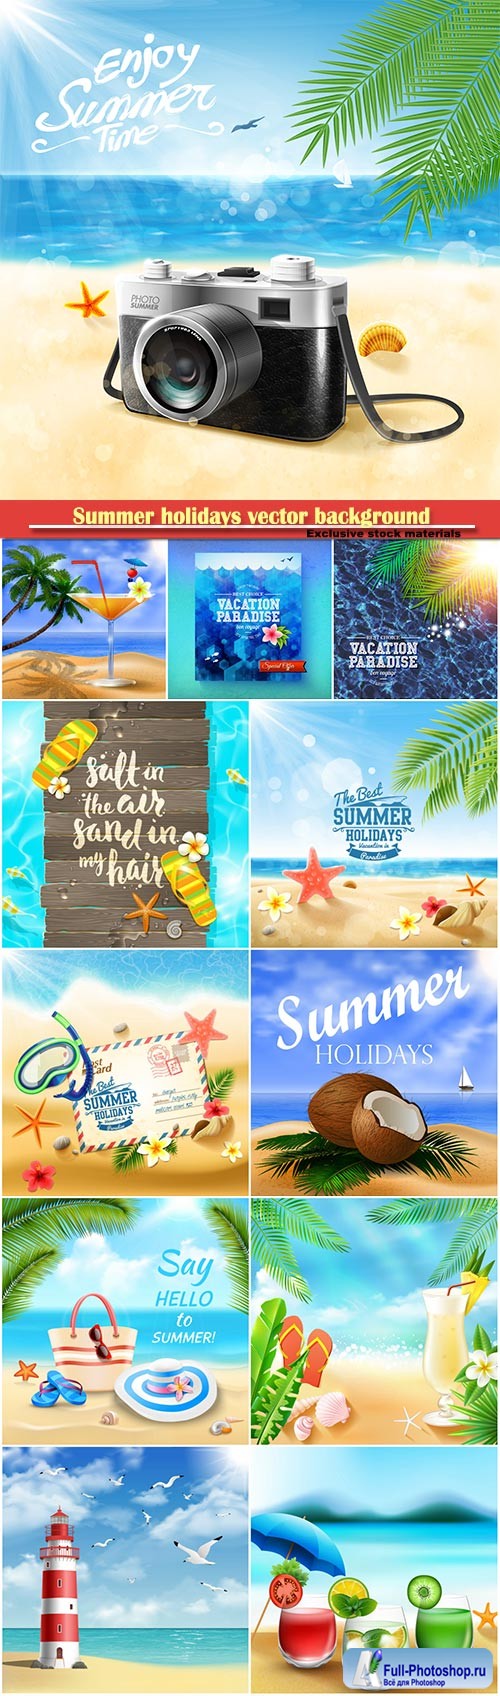 Summer holidays vector background, tropical beach, sea, fresh cocktails, sand # 10